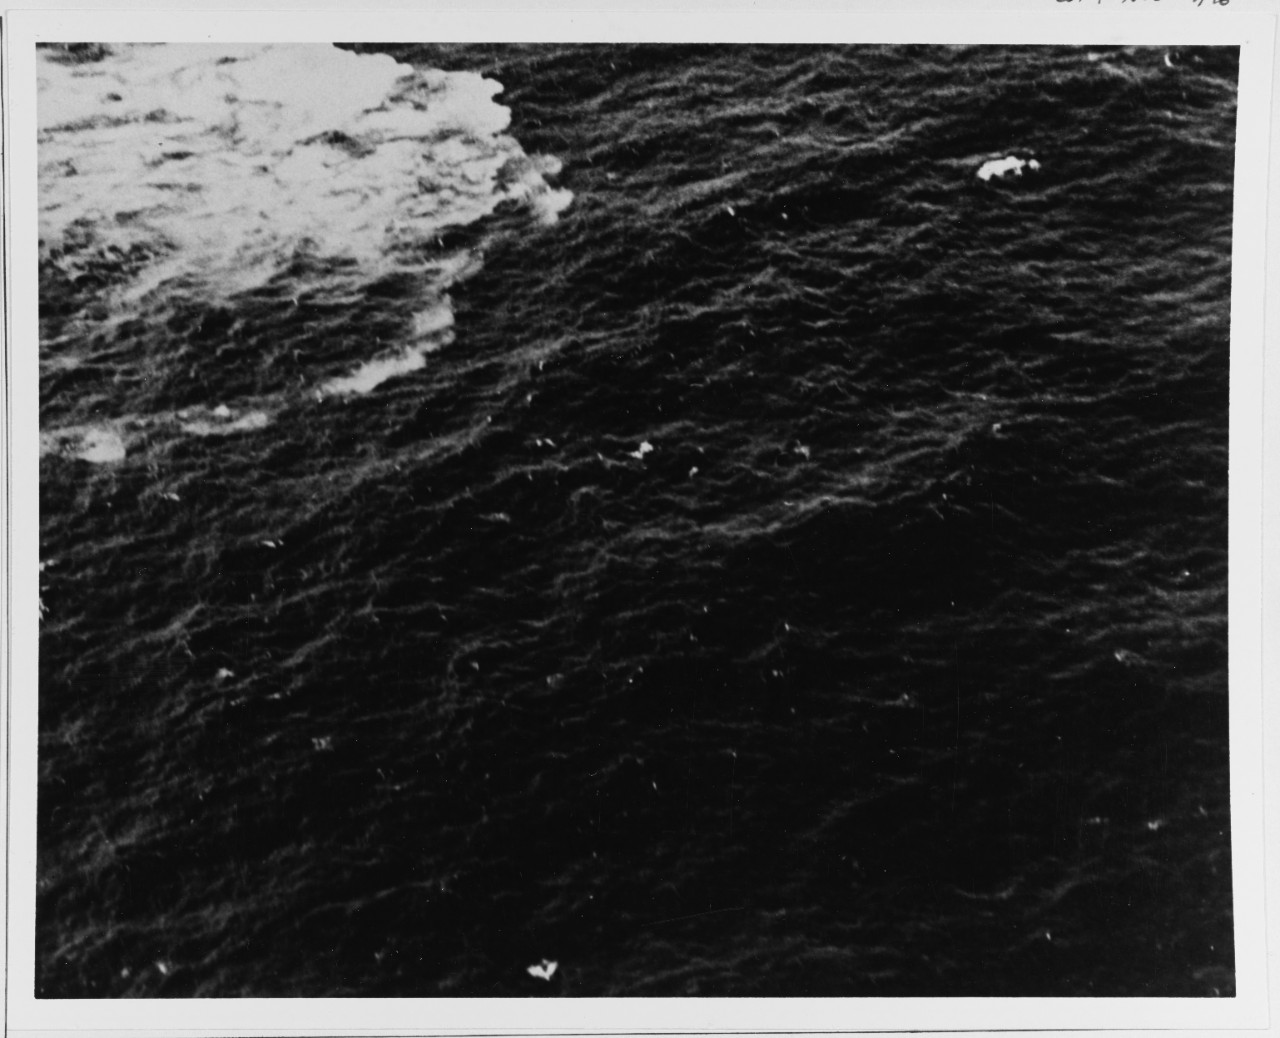 Sinking of U-156